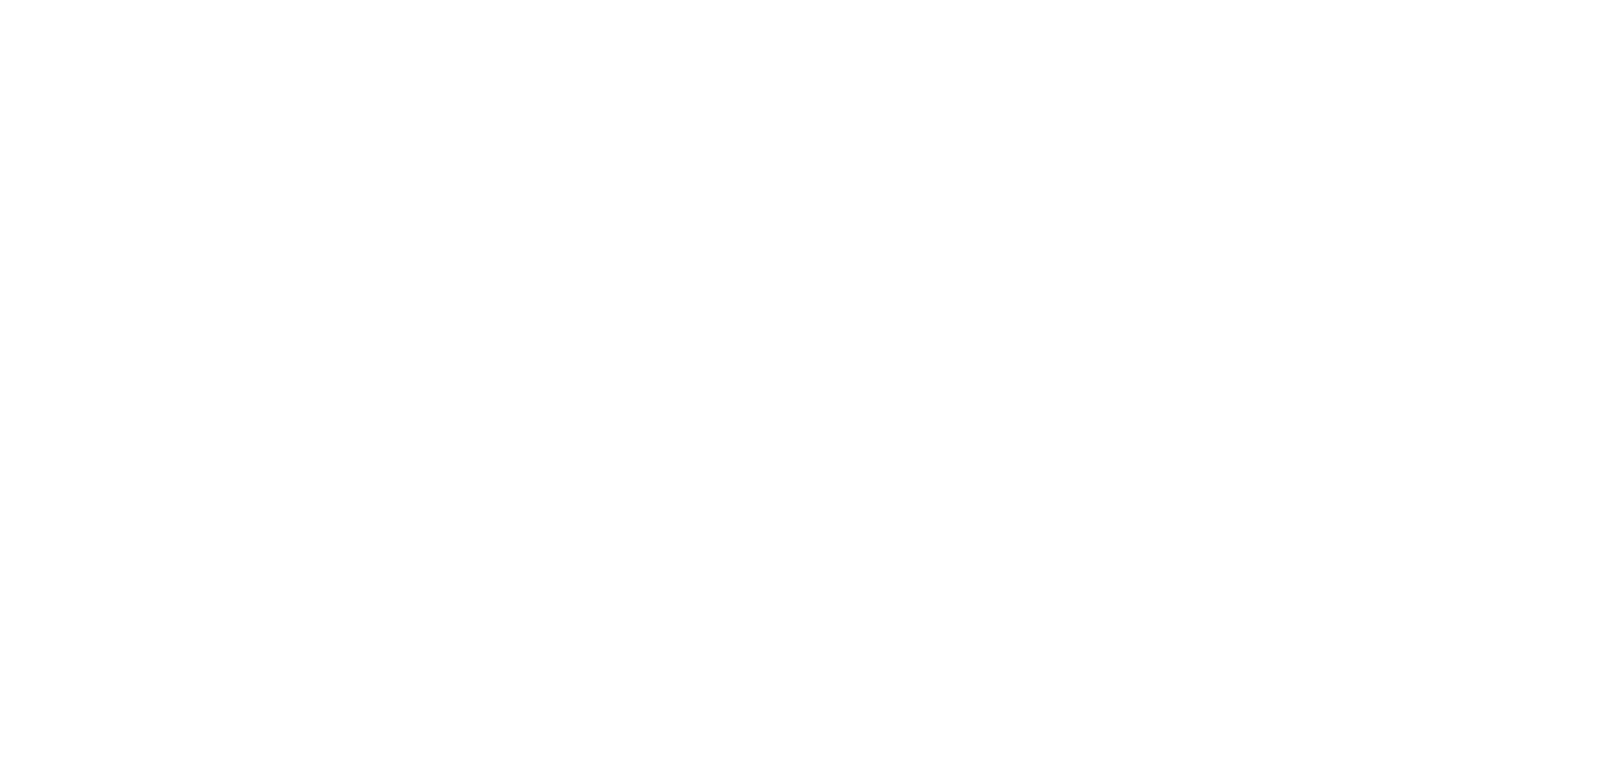 Tampa Bay Area Chiropractor, Dr. Blair Milo